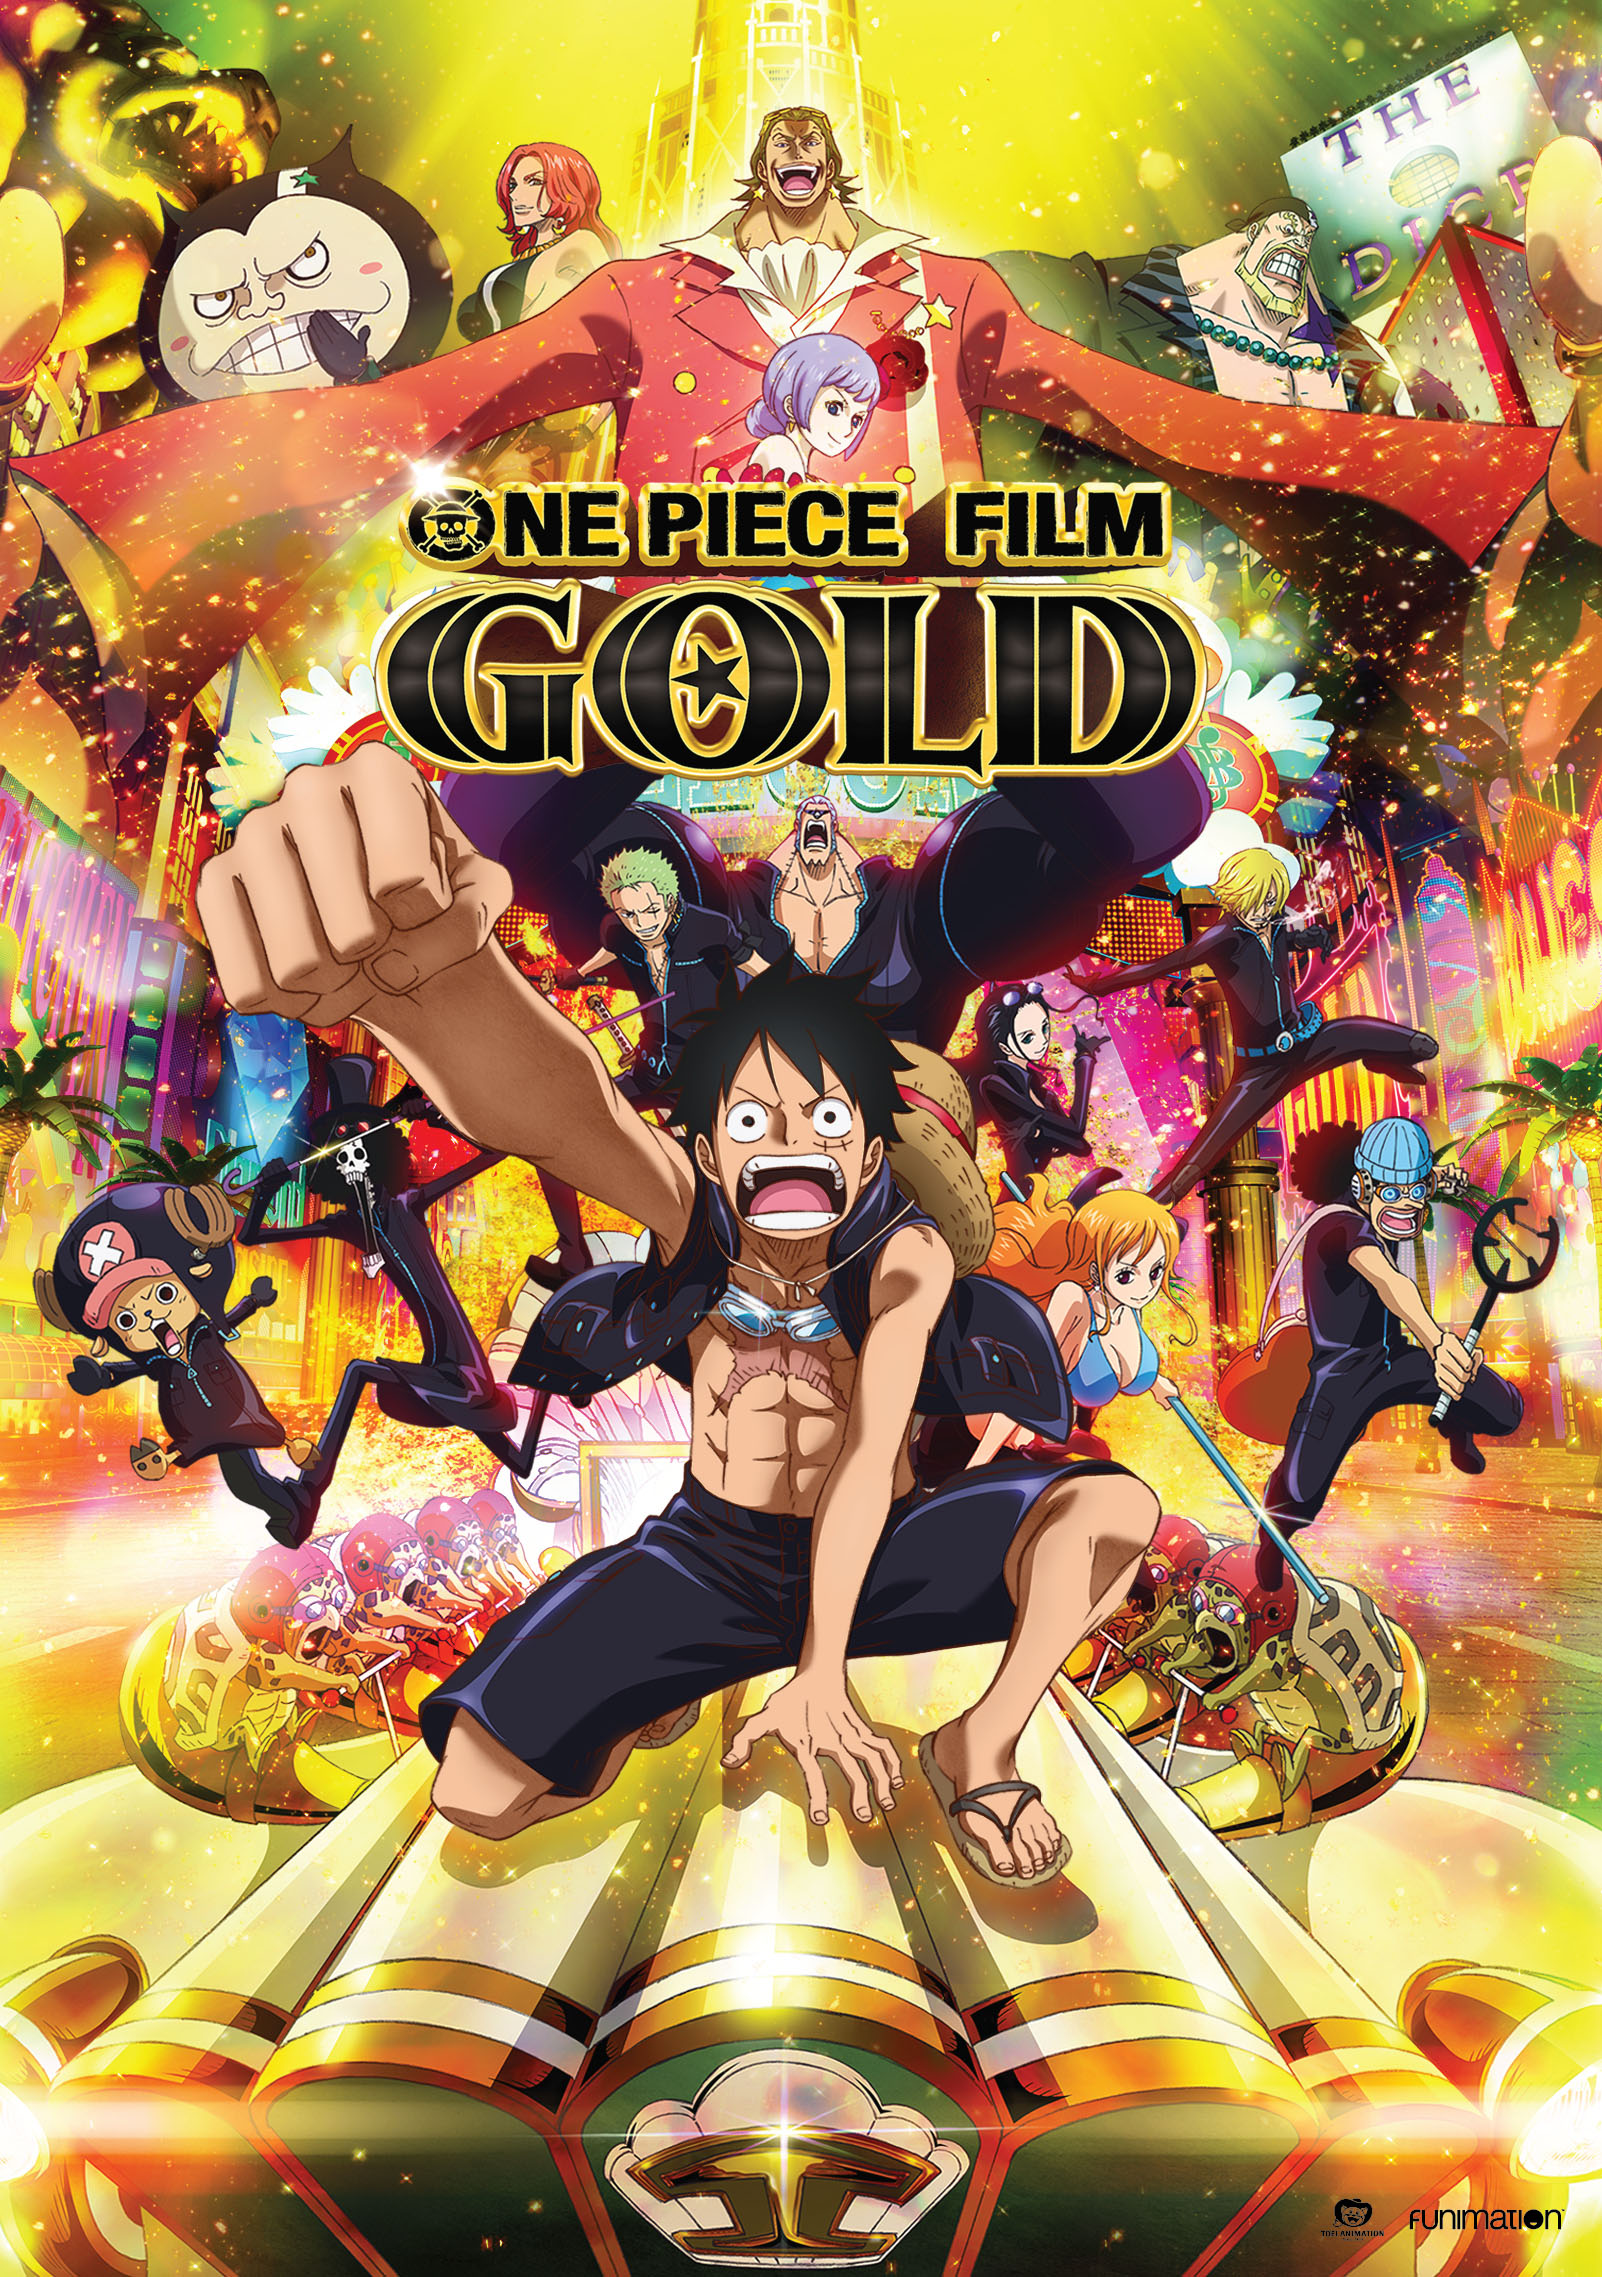 One Piece Film: Gold - Wikipedia